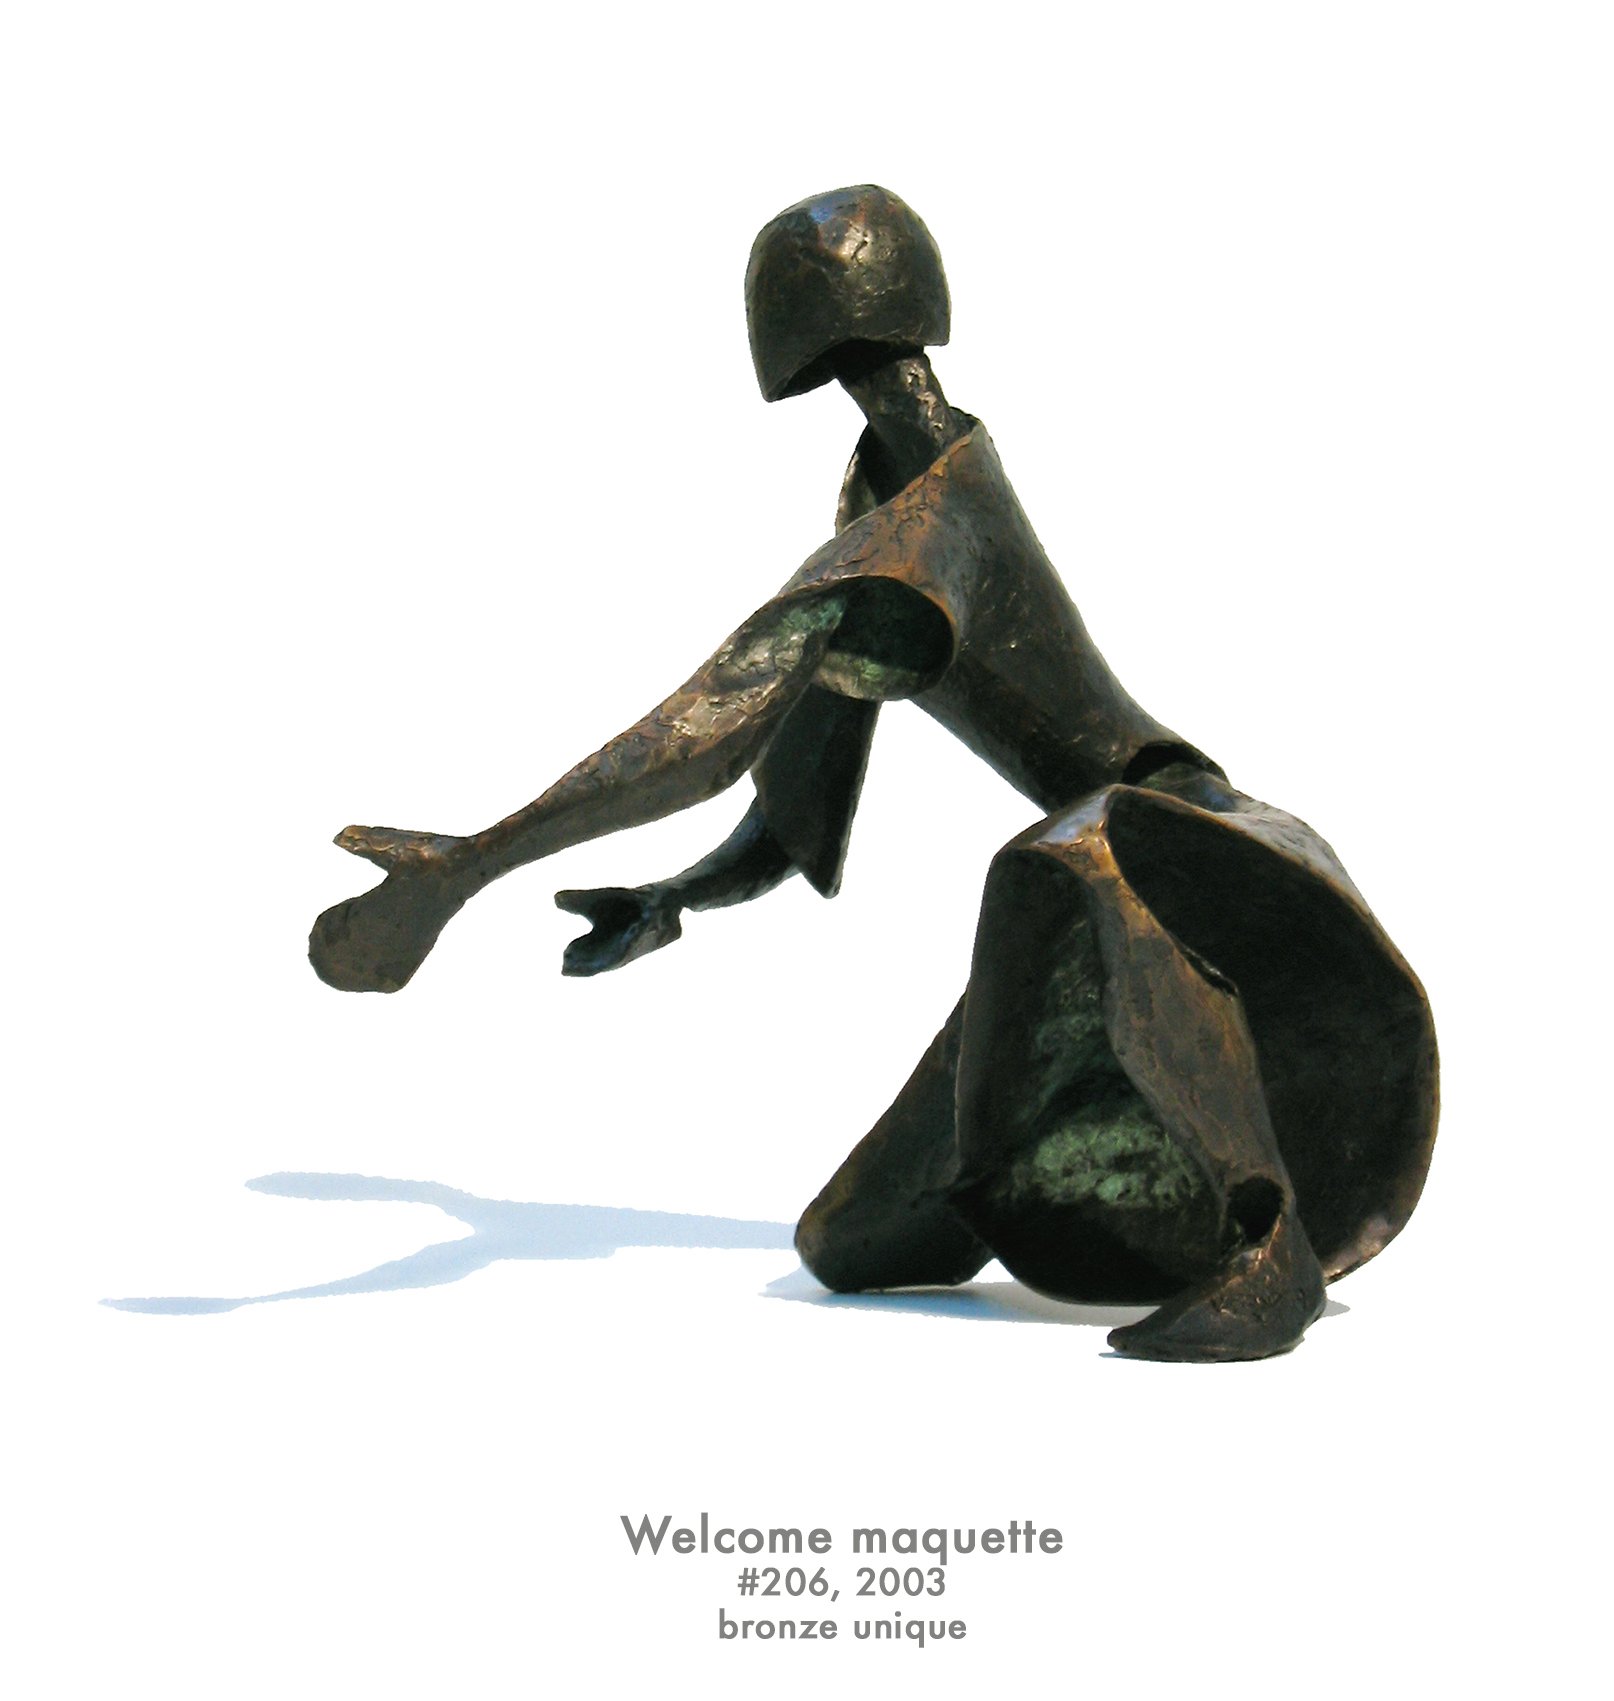 Welcome maquette, 2003, bronze, #206